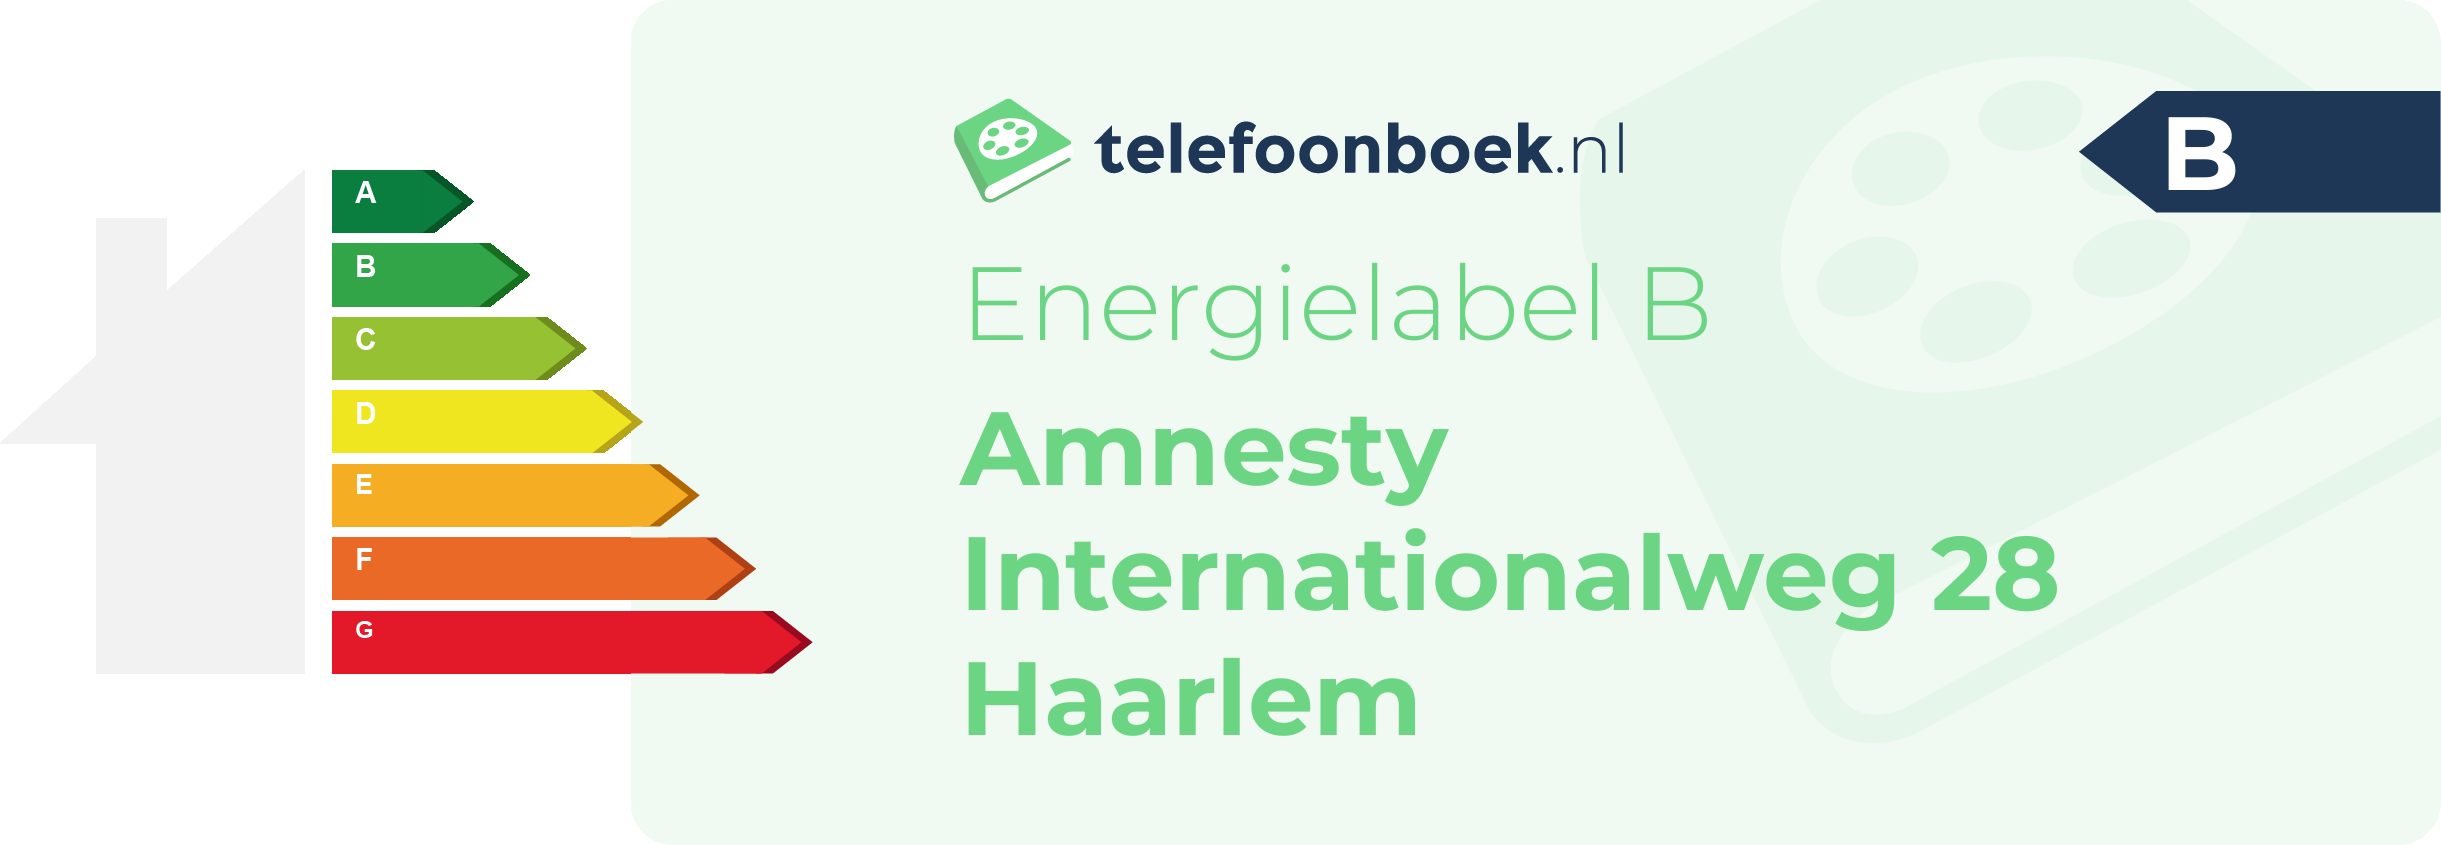 Energielabel Amnesty Internationalweg 28 Haarlem